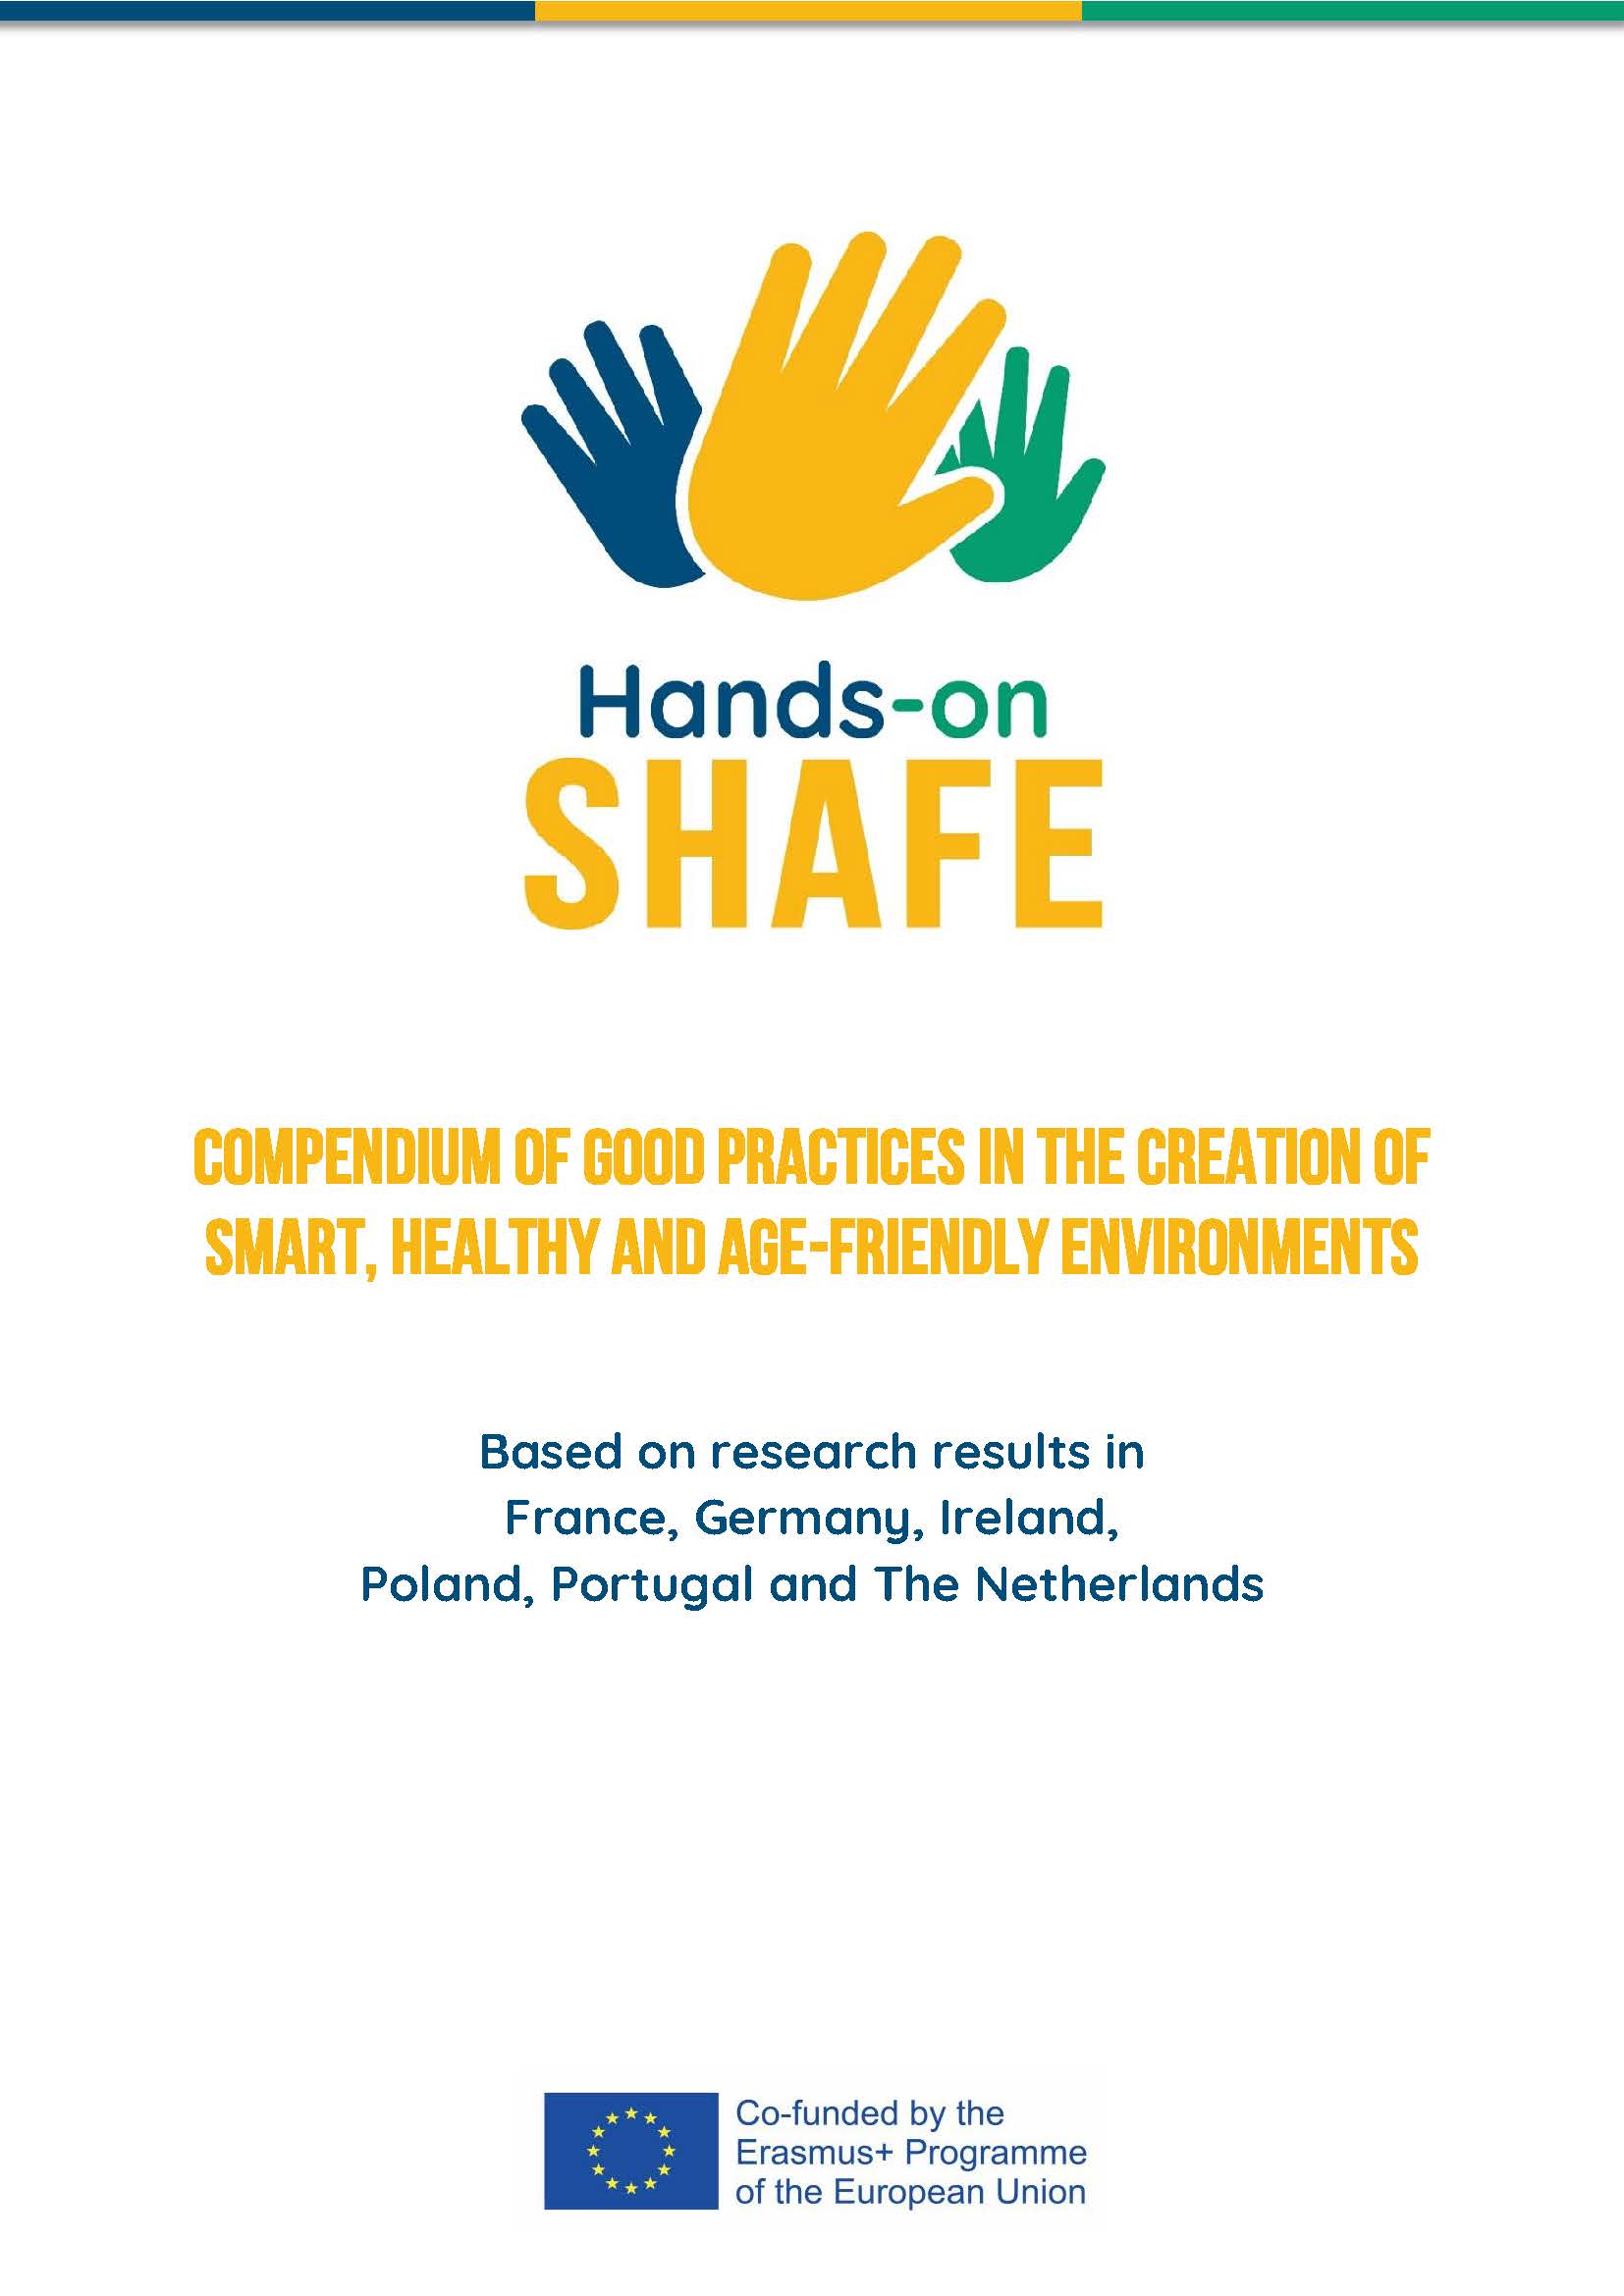 Explore compendium of good practices on SHAFE in Europe